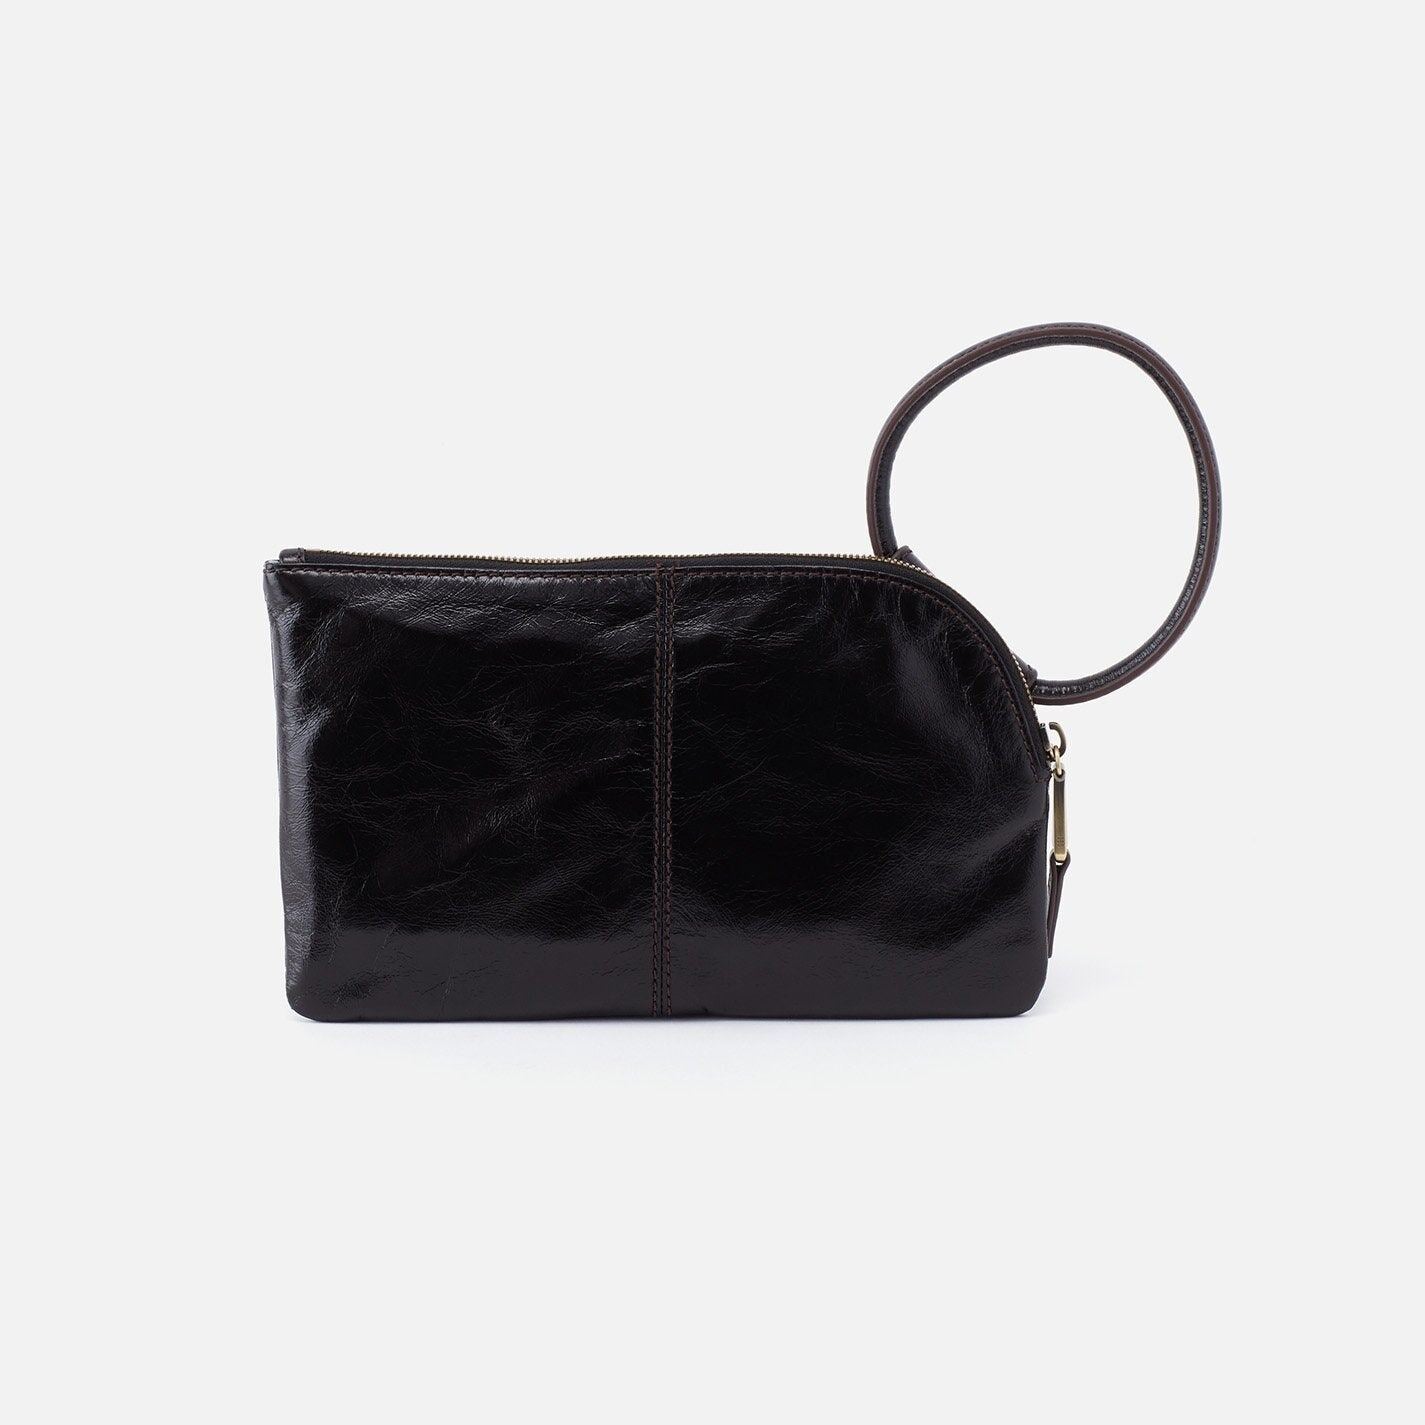 Hobo Bags "Sable" Wristlet-Black